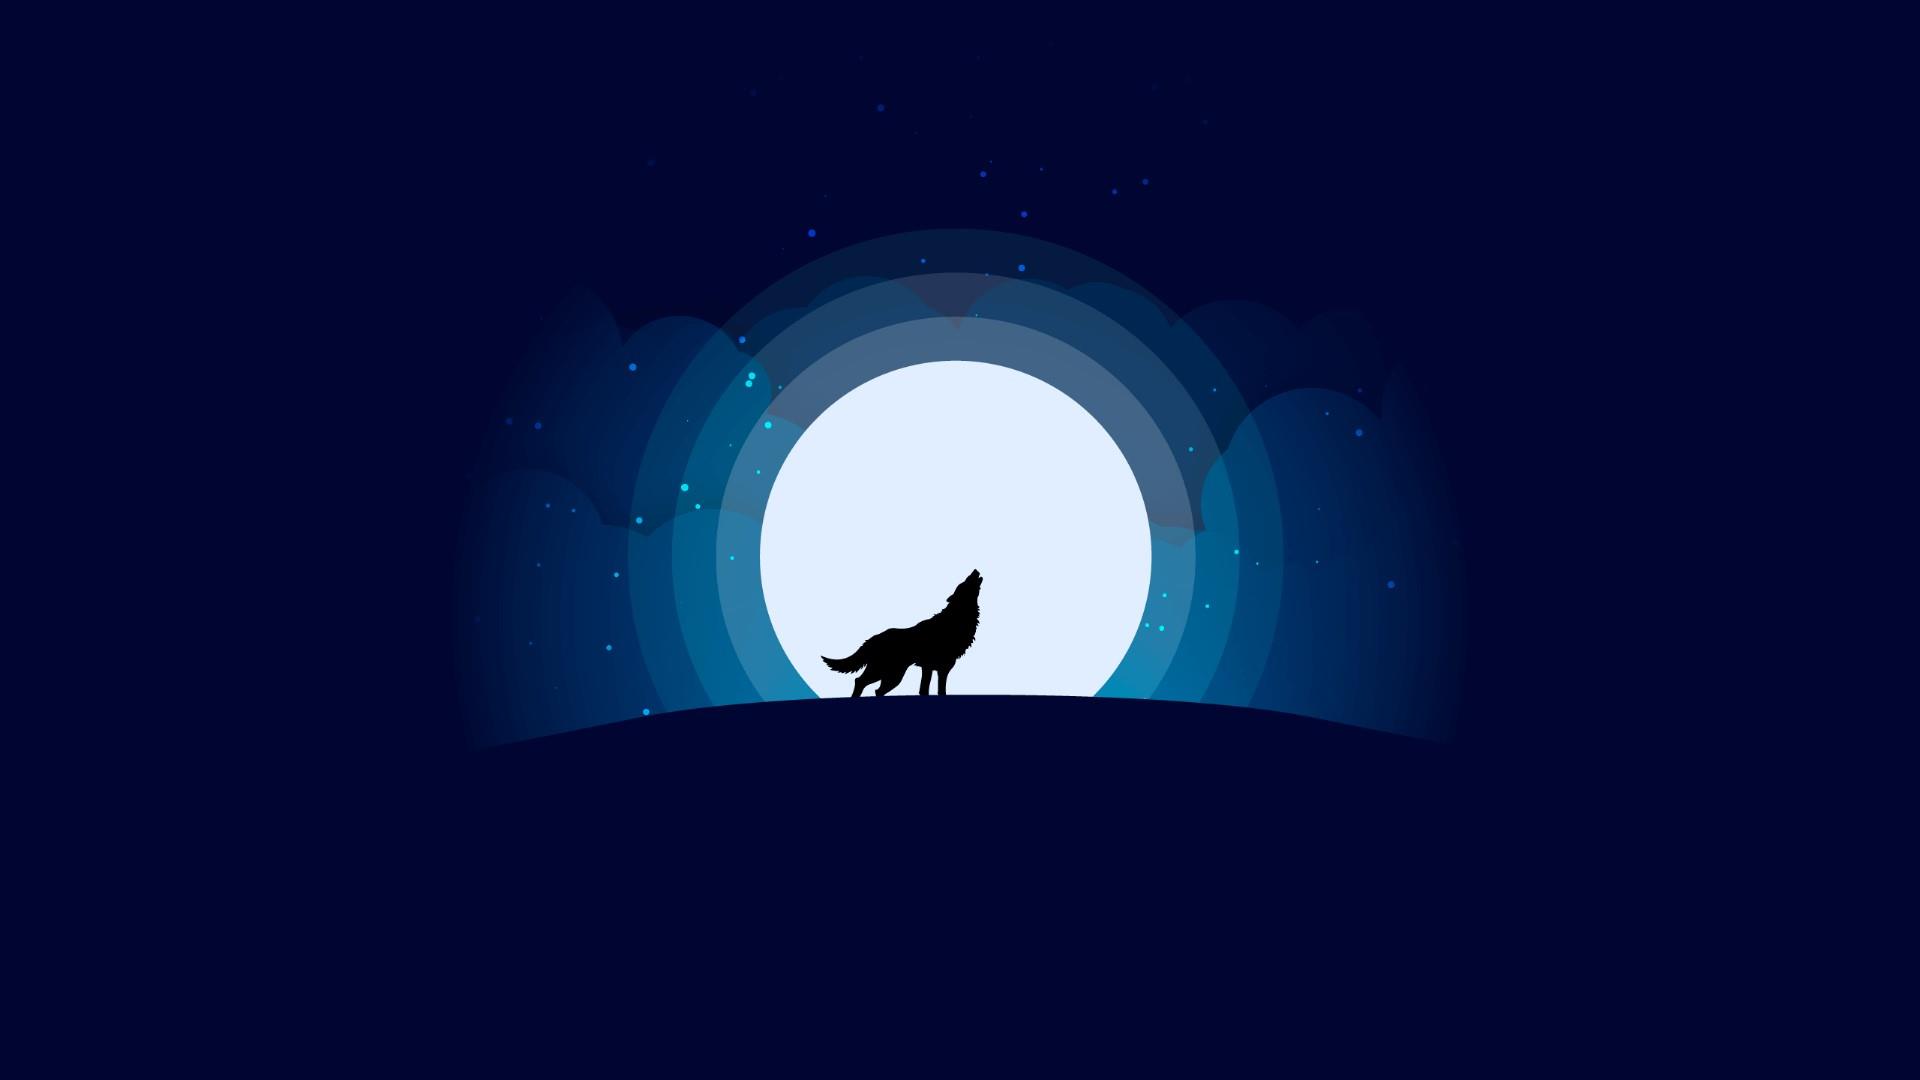 Wolf With Full Moon Design Wallpaper. Wallpaper Studio